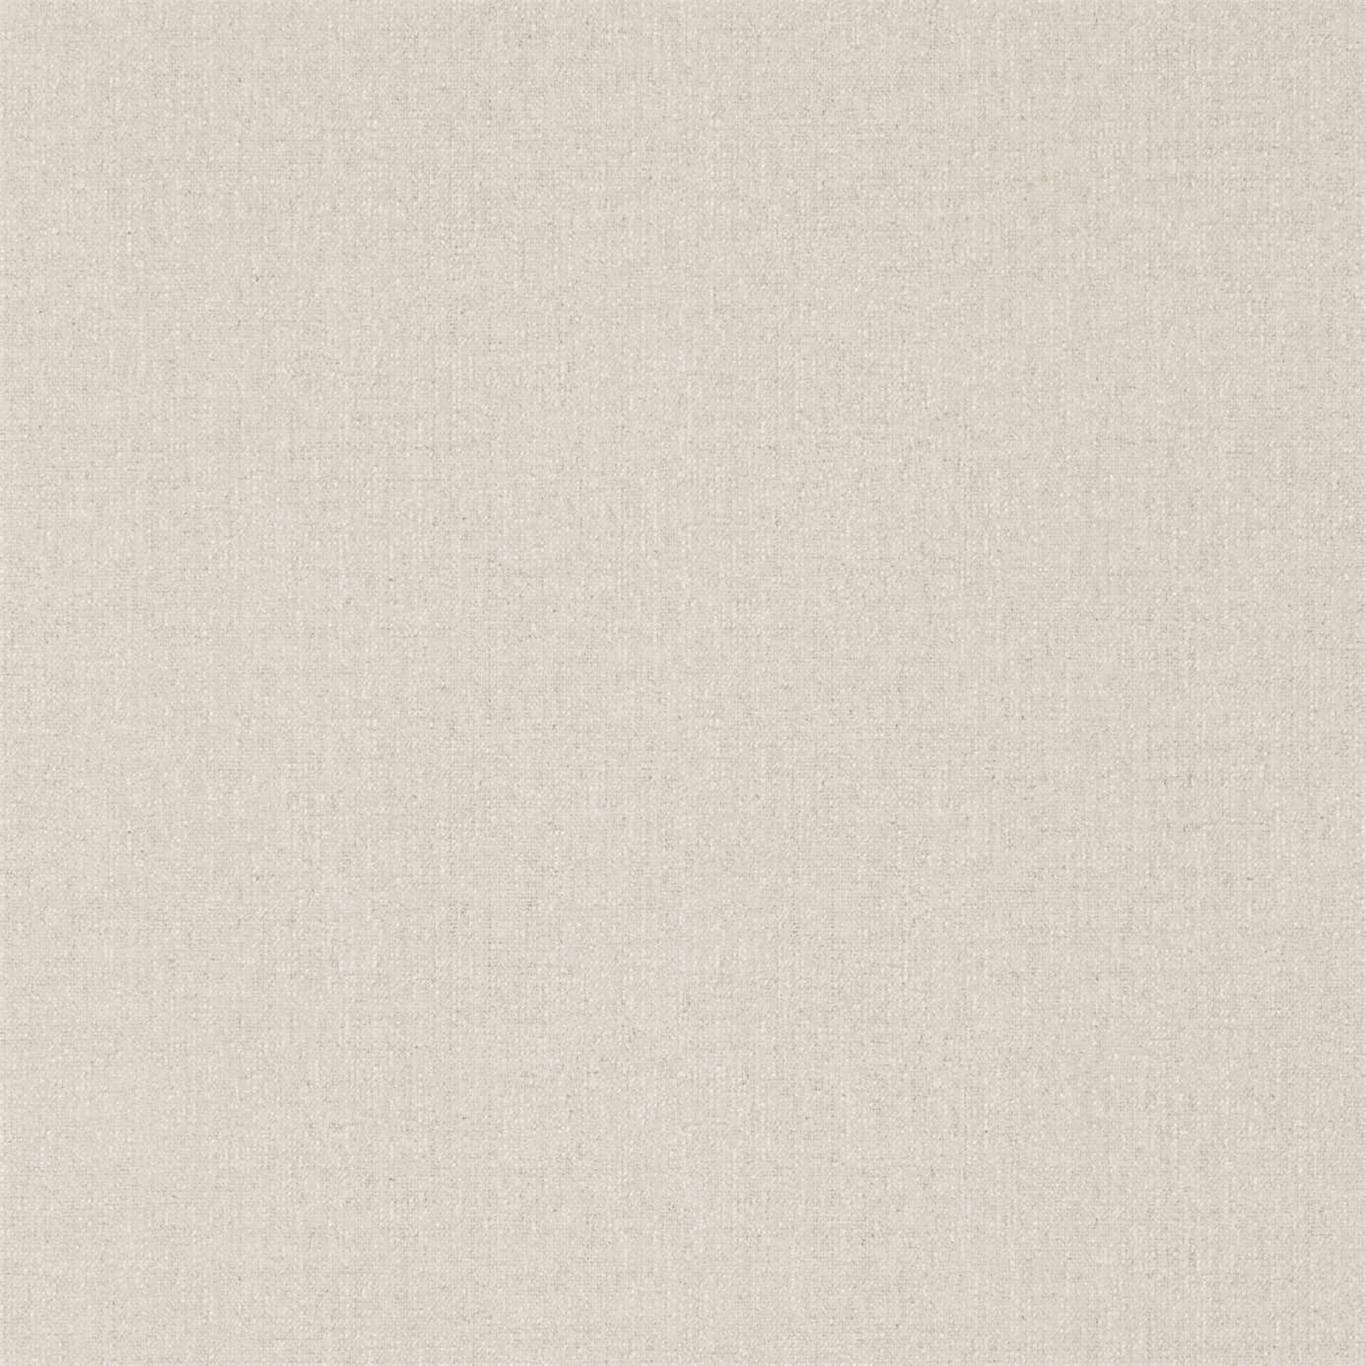 Soho Plain Soft Grey Wallpaper DCPW215449 by Sanderson